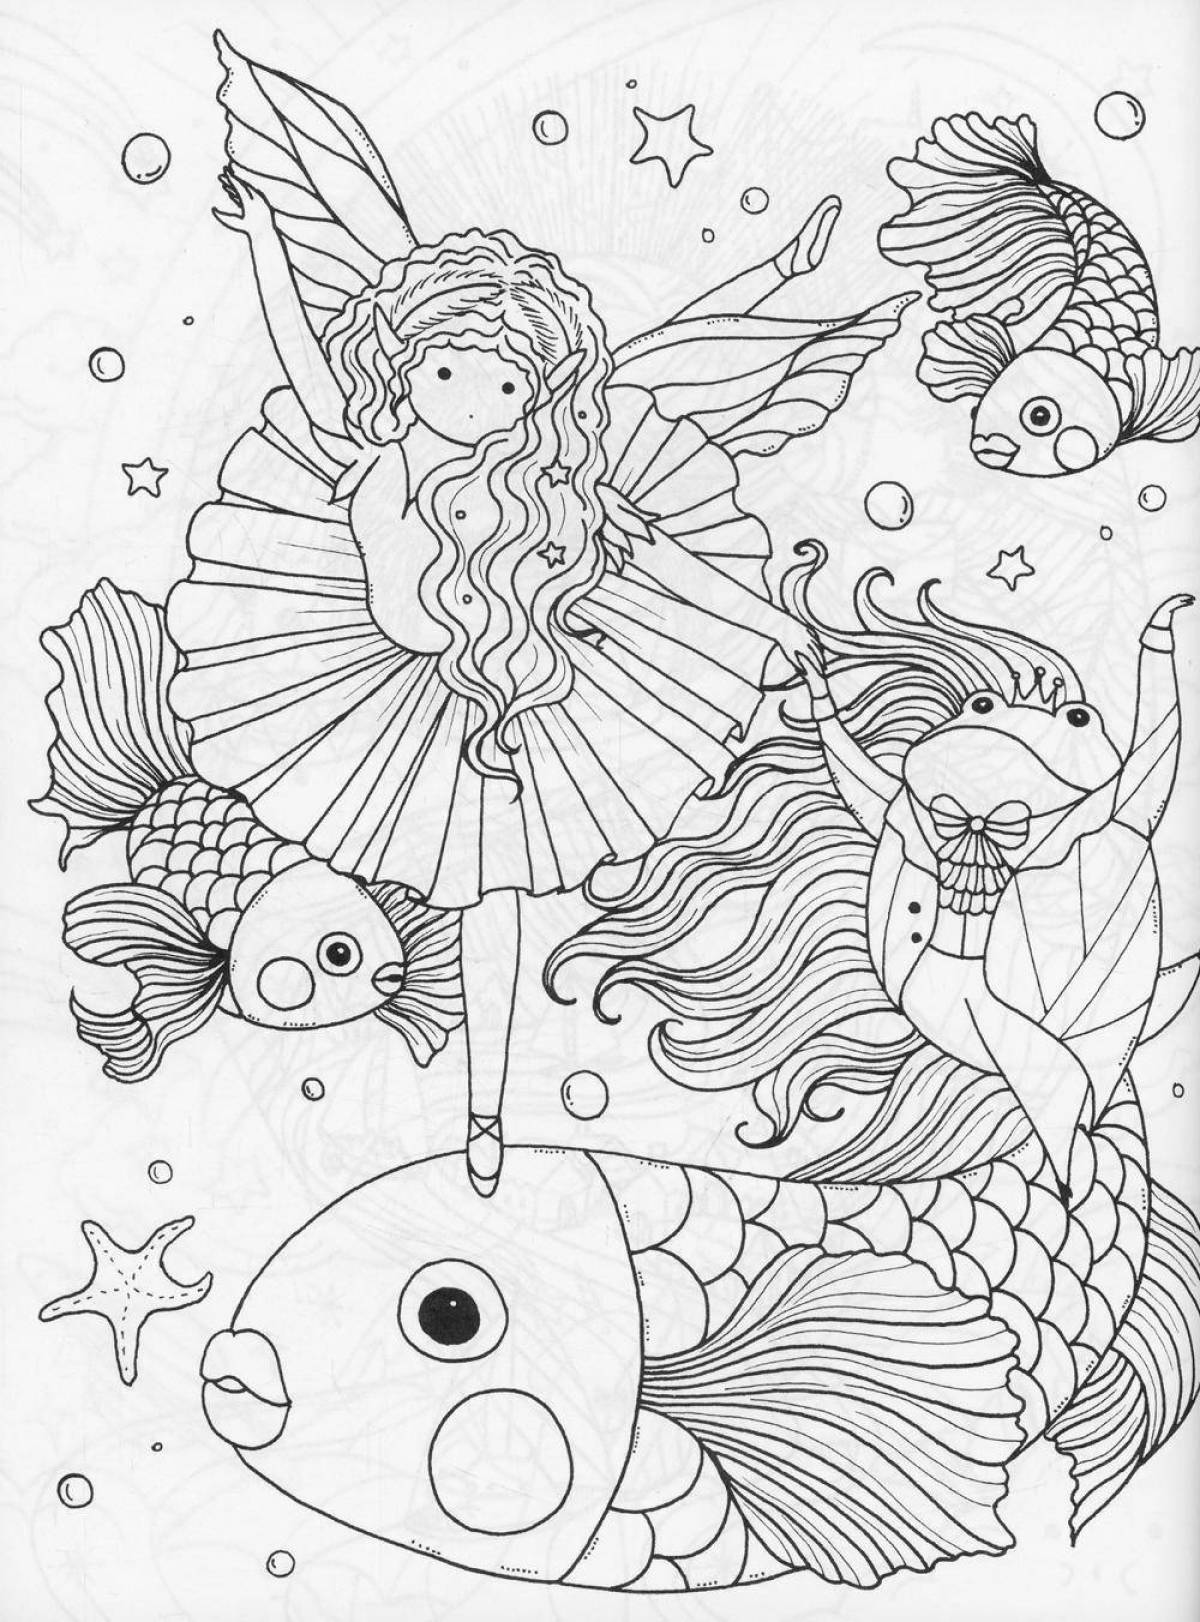 Coloring million mermaids lulu mayo